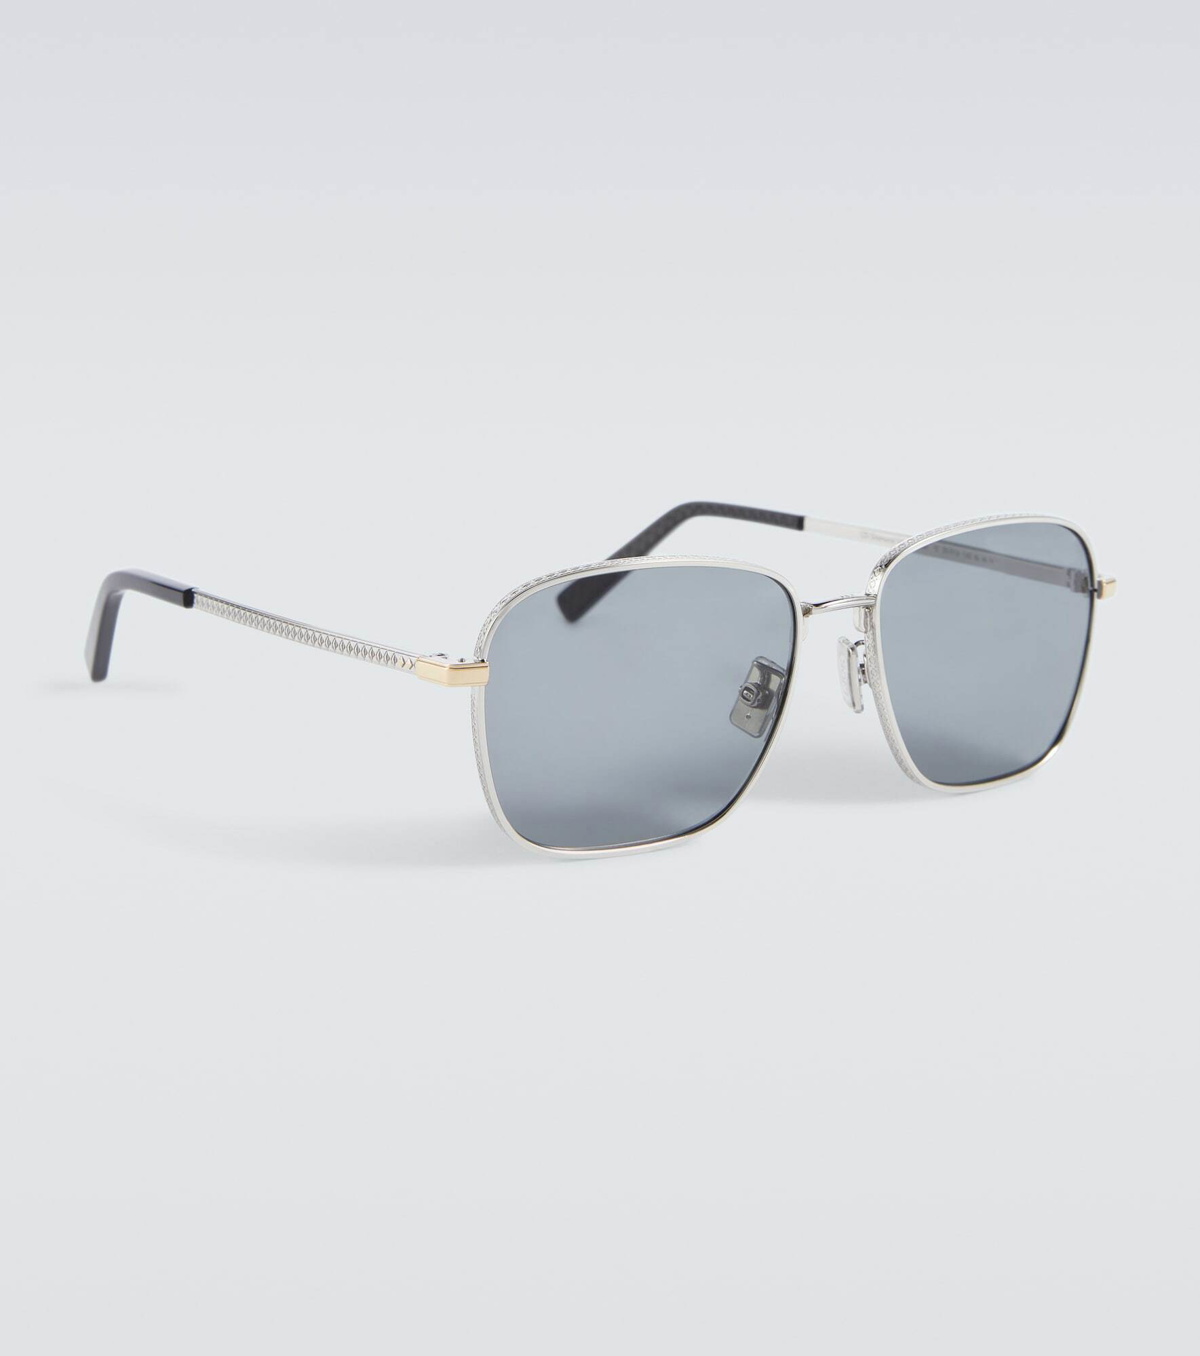 Dior Eyewear - CD Diamond S4U convertible aviator sunglasses Dior Eyewear